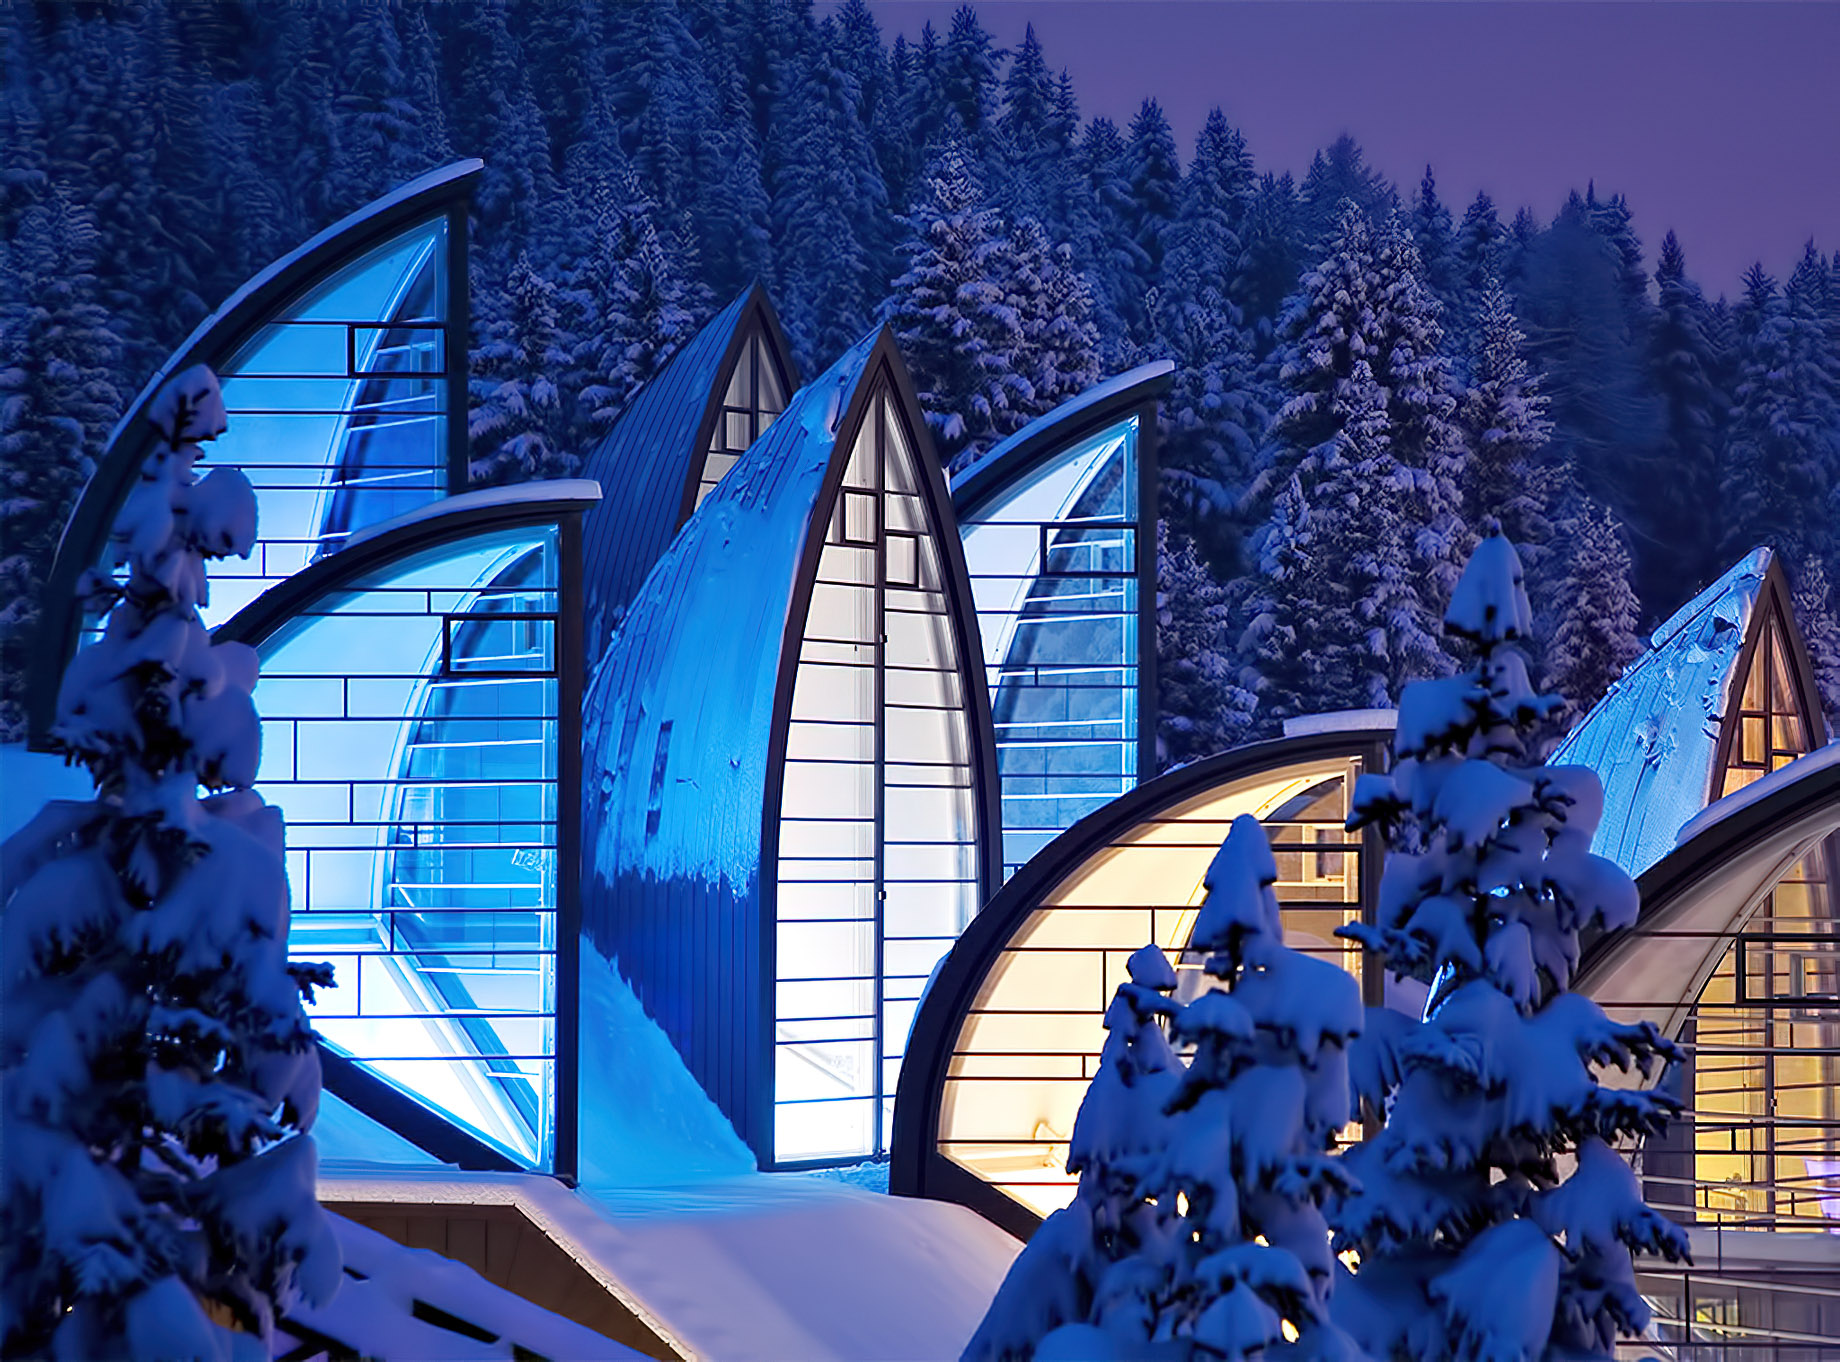 Tschuggen Grand Hotel – Arosa, Switzerland – Winter Neon Night